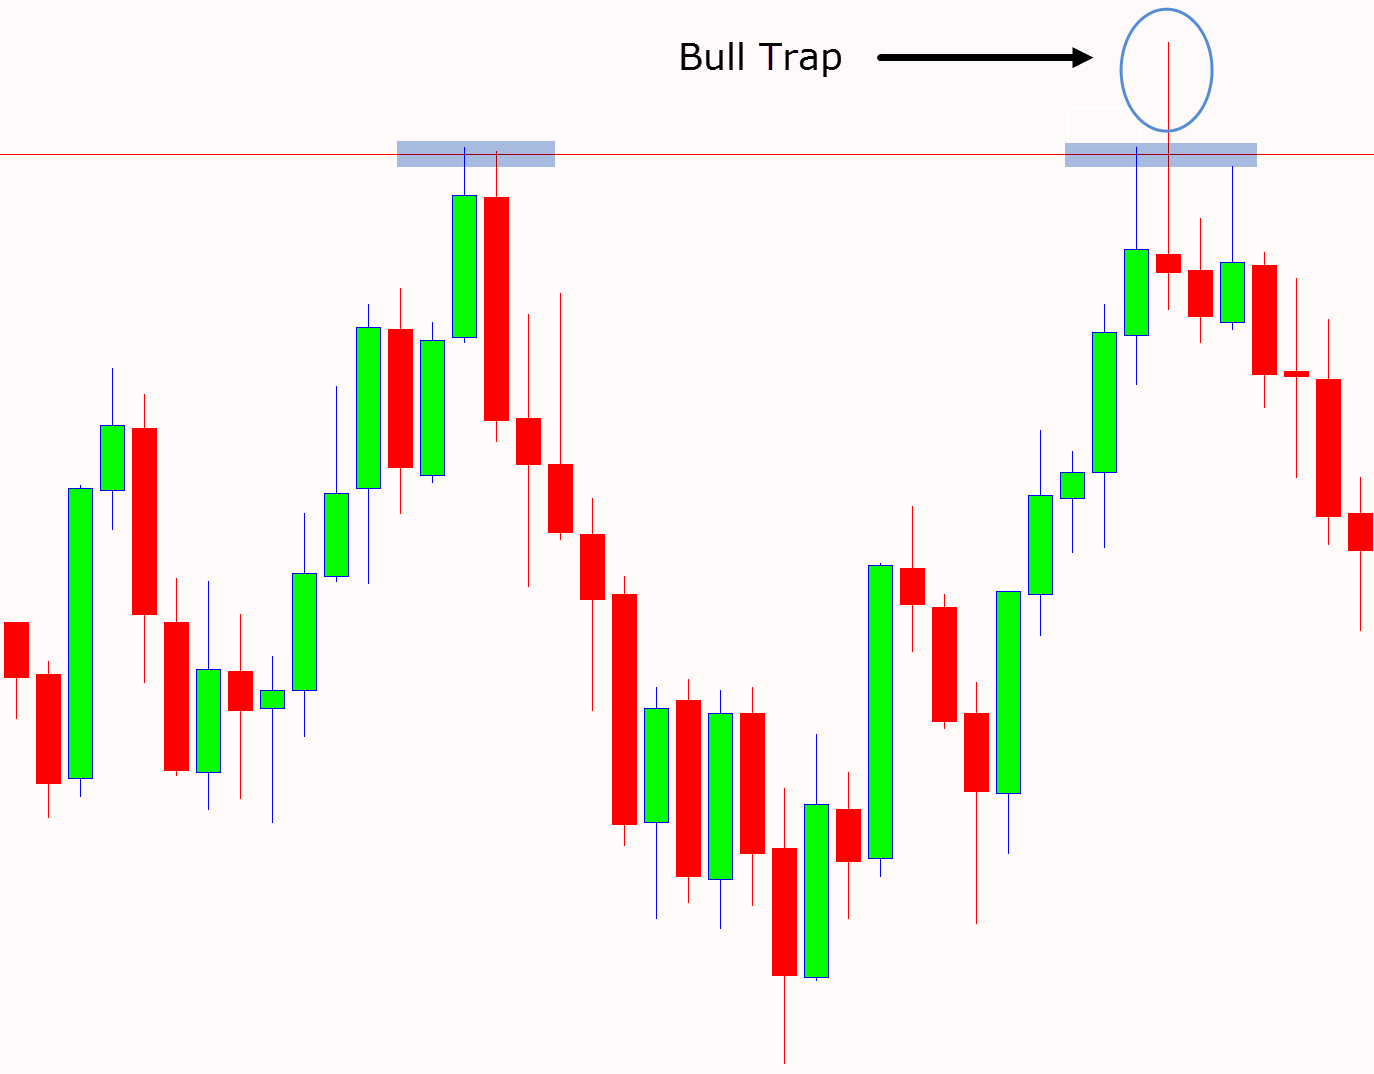 Bull trap trading